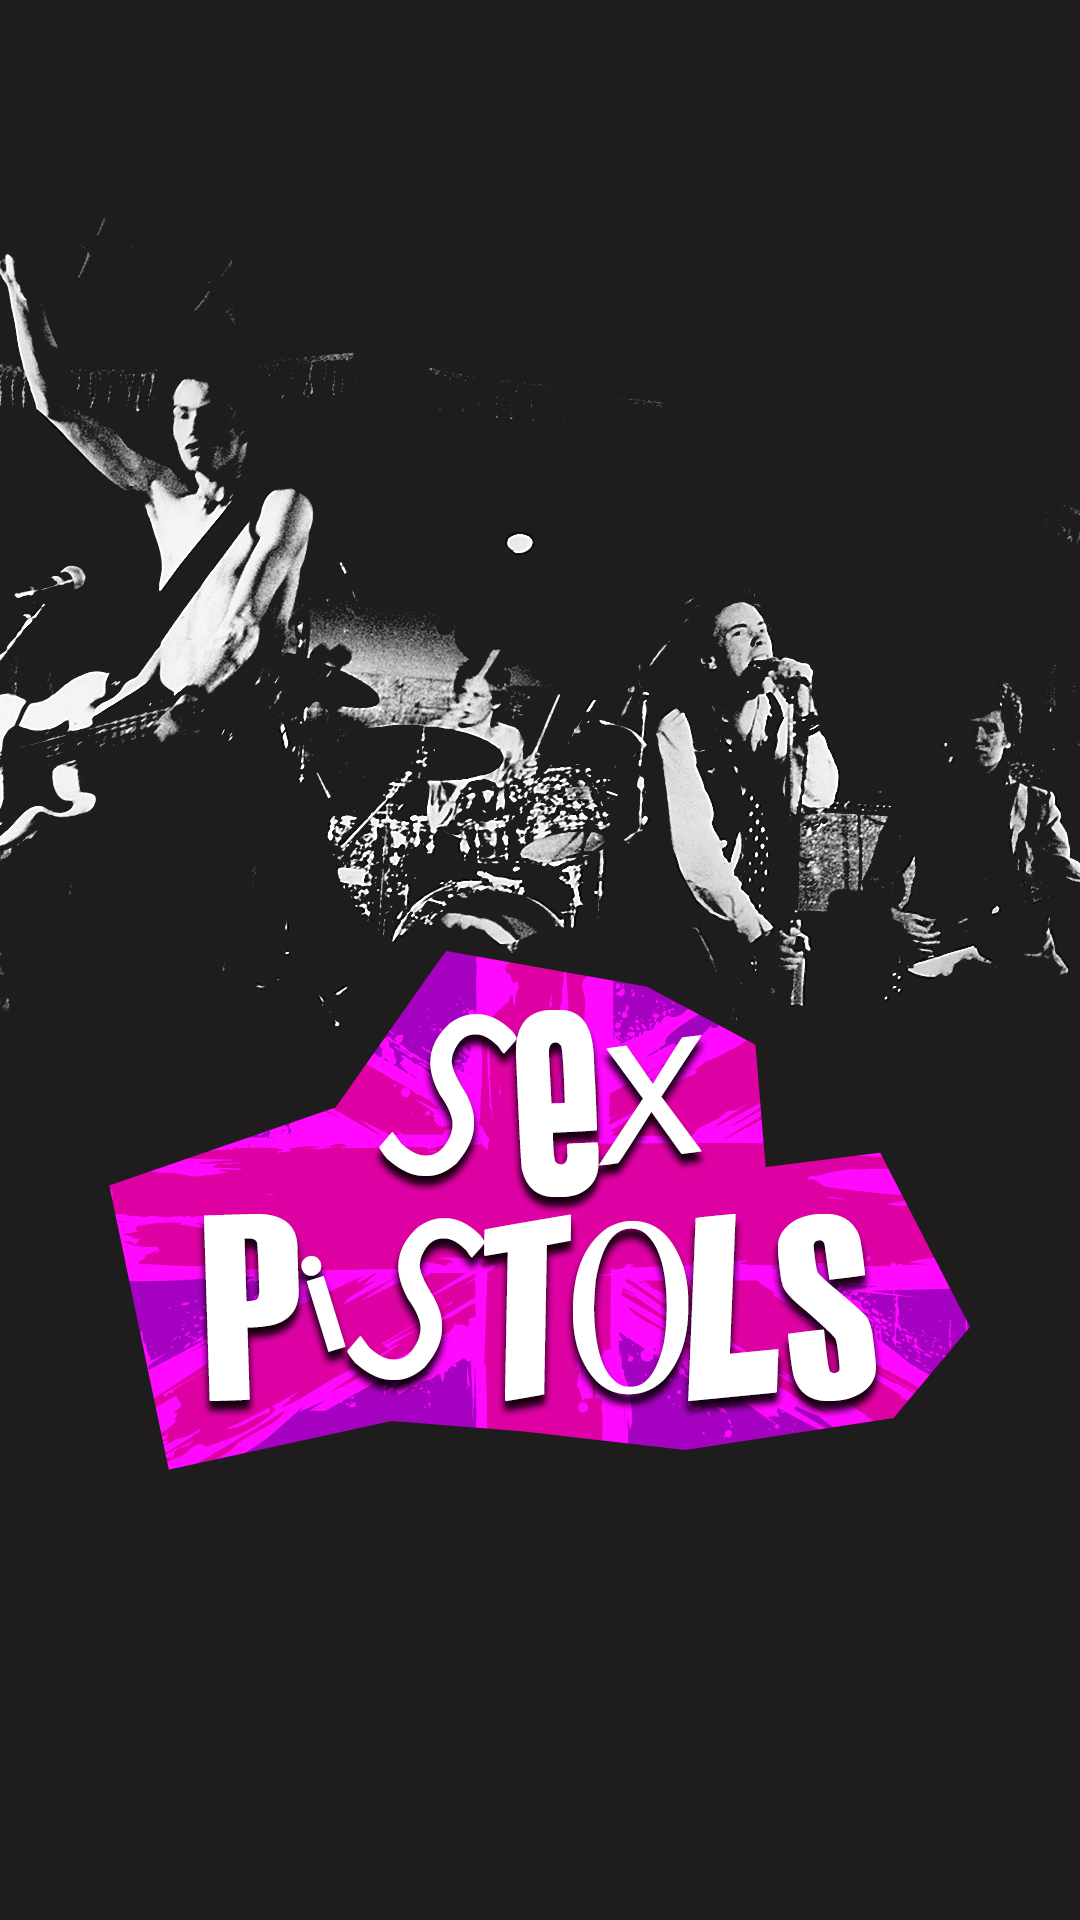 Sex Pistols - Photo Print - UK, 1970s